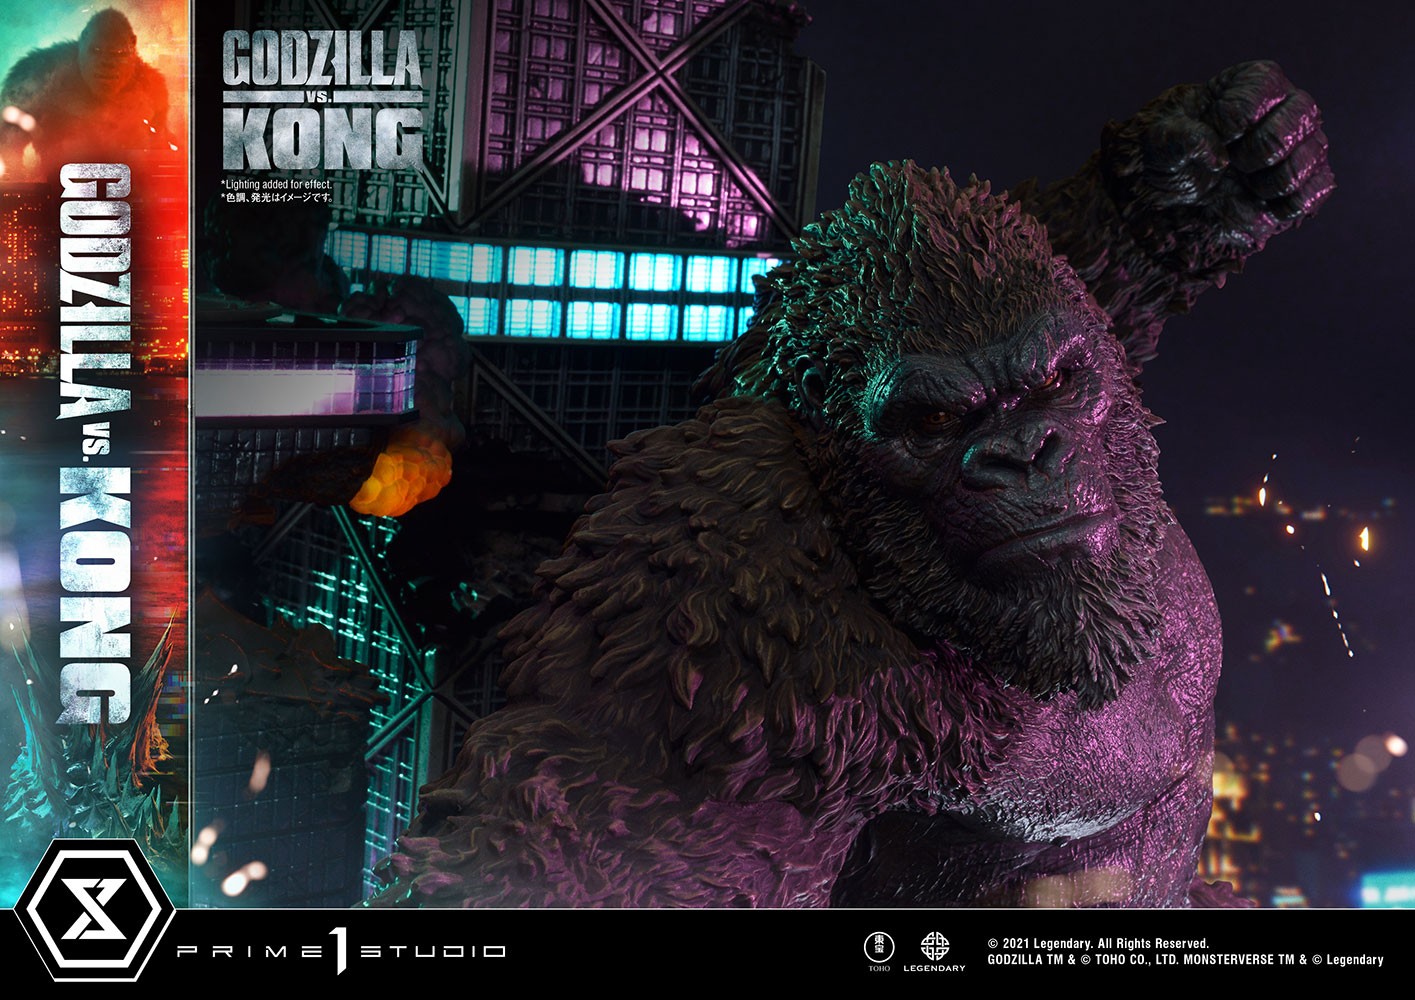 Godzilla vs Kong Final Battle (Prototype Shown) View 39